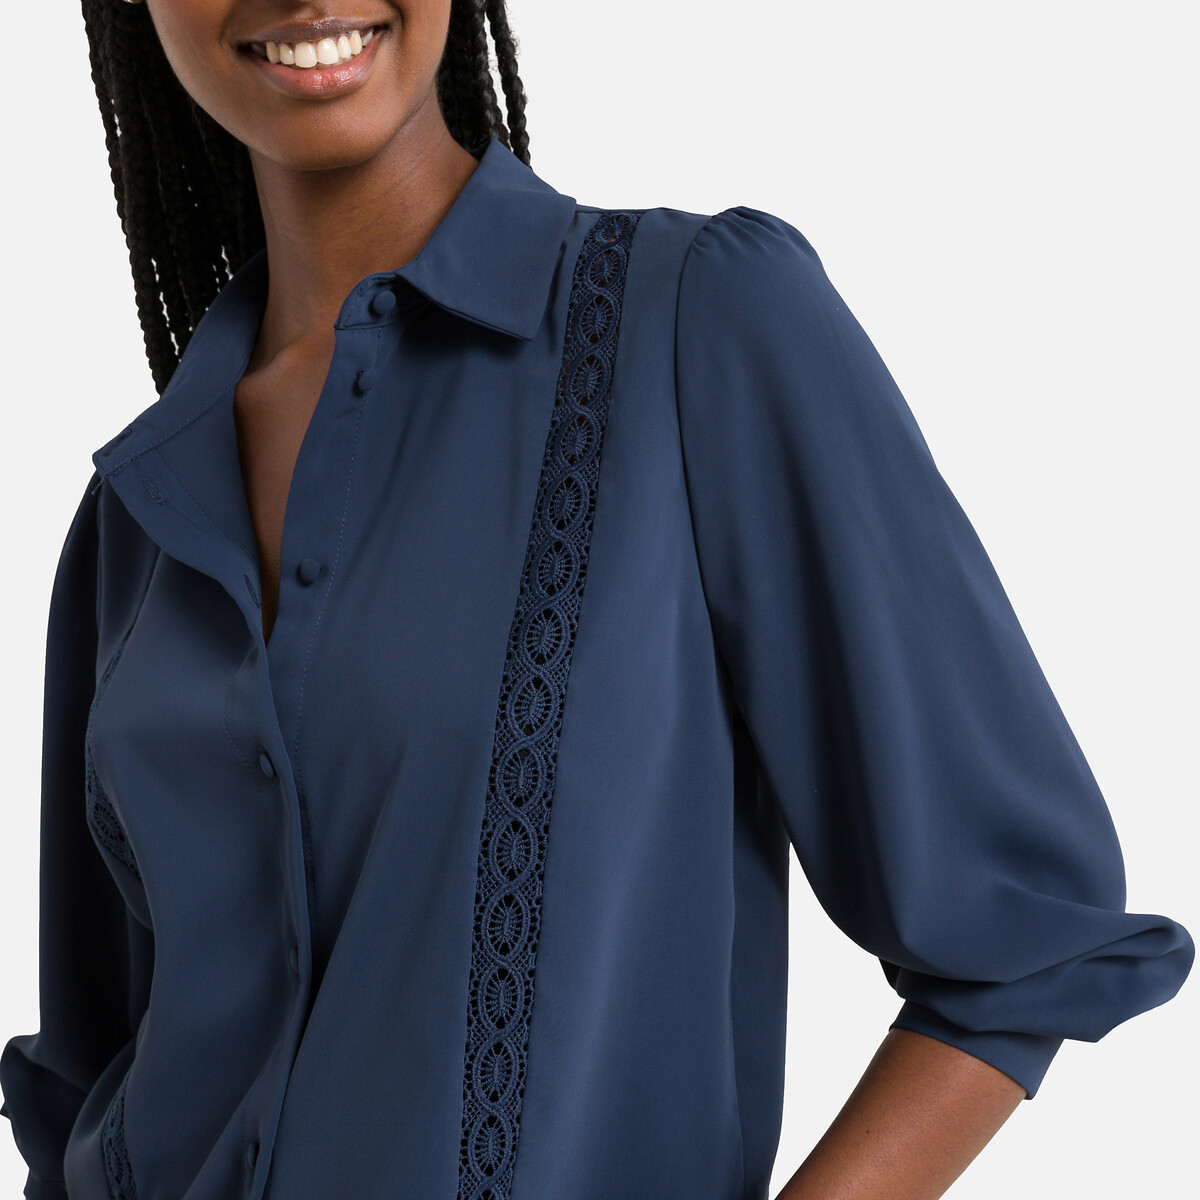 Рубашка Длинные рукава вставка из кружева S синий LaRedoute, размер S - фото 3